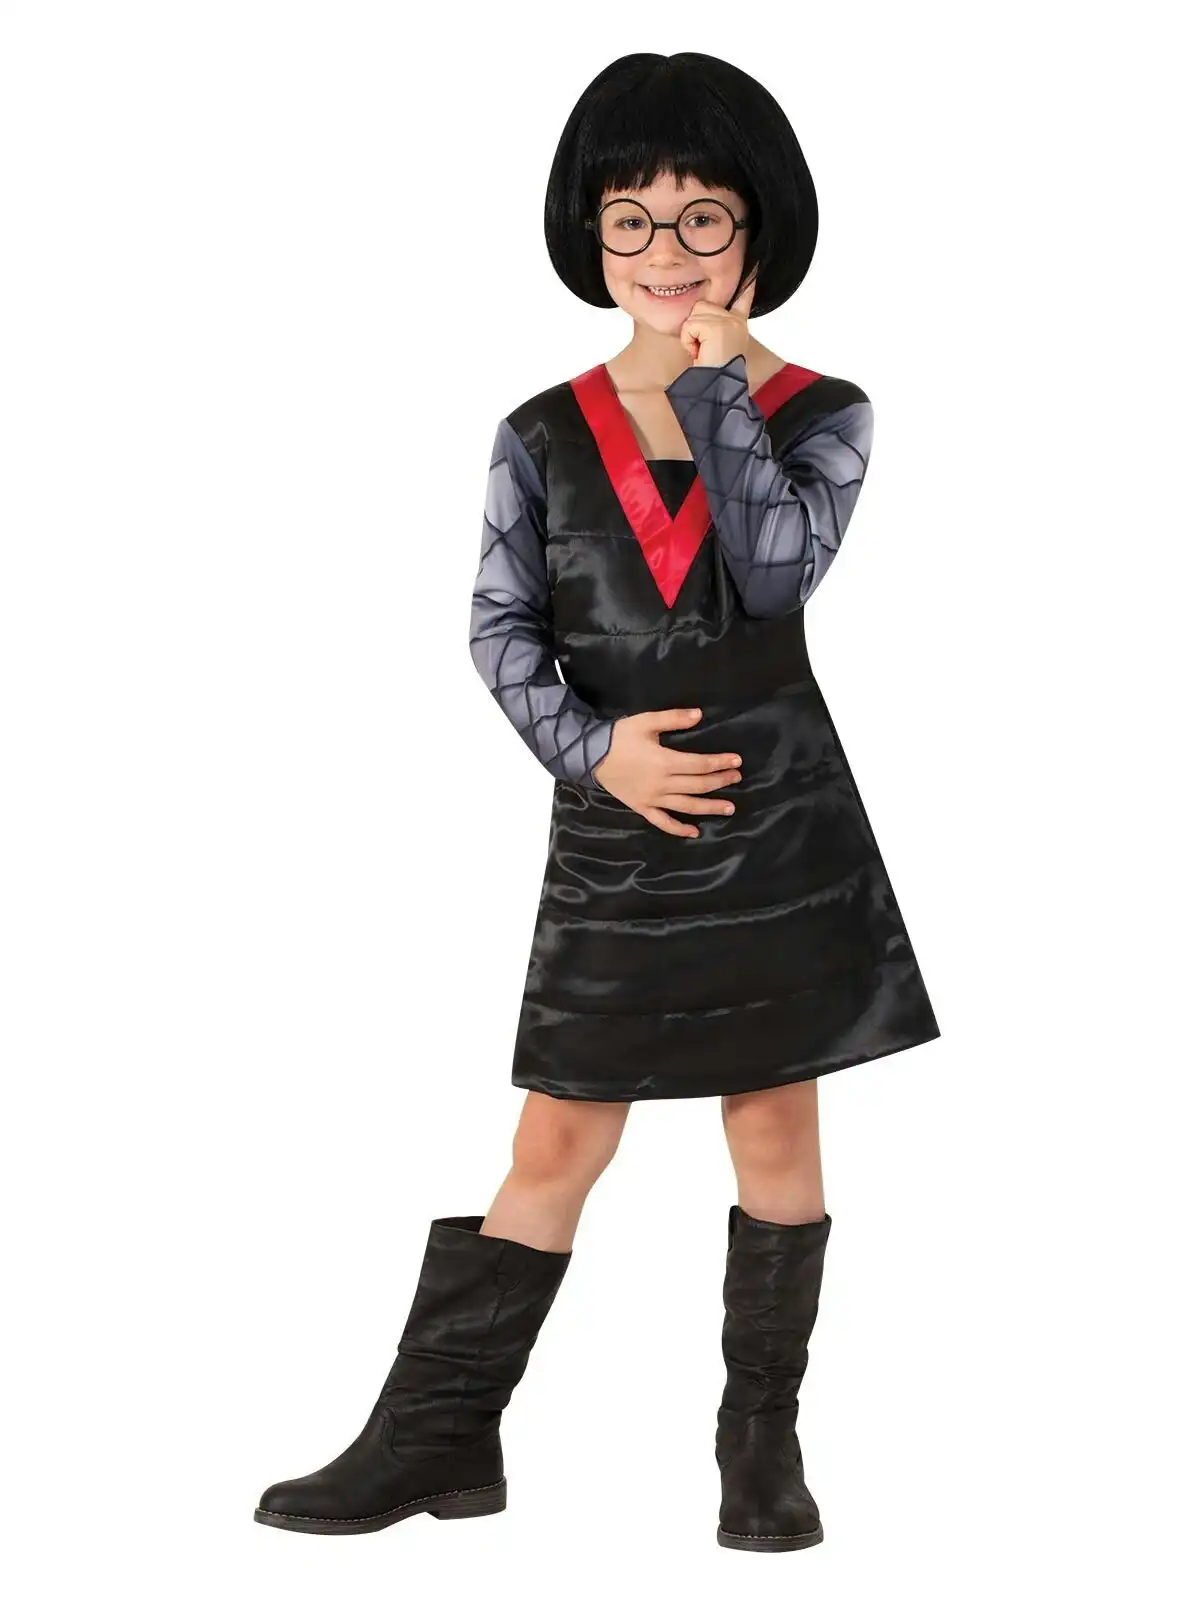 Disney Pixar Edna Mode Deluxe Dress Up Costume Kids/Children/Girls Size 4-6